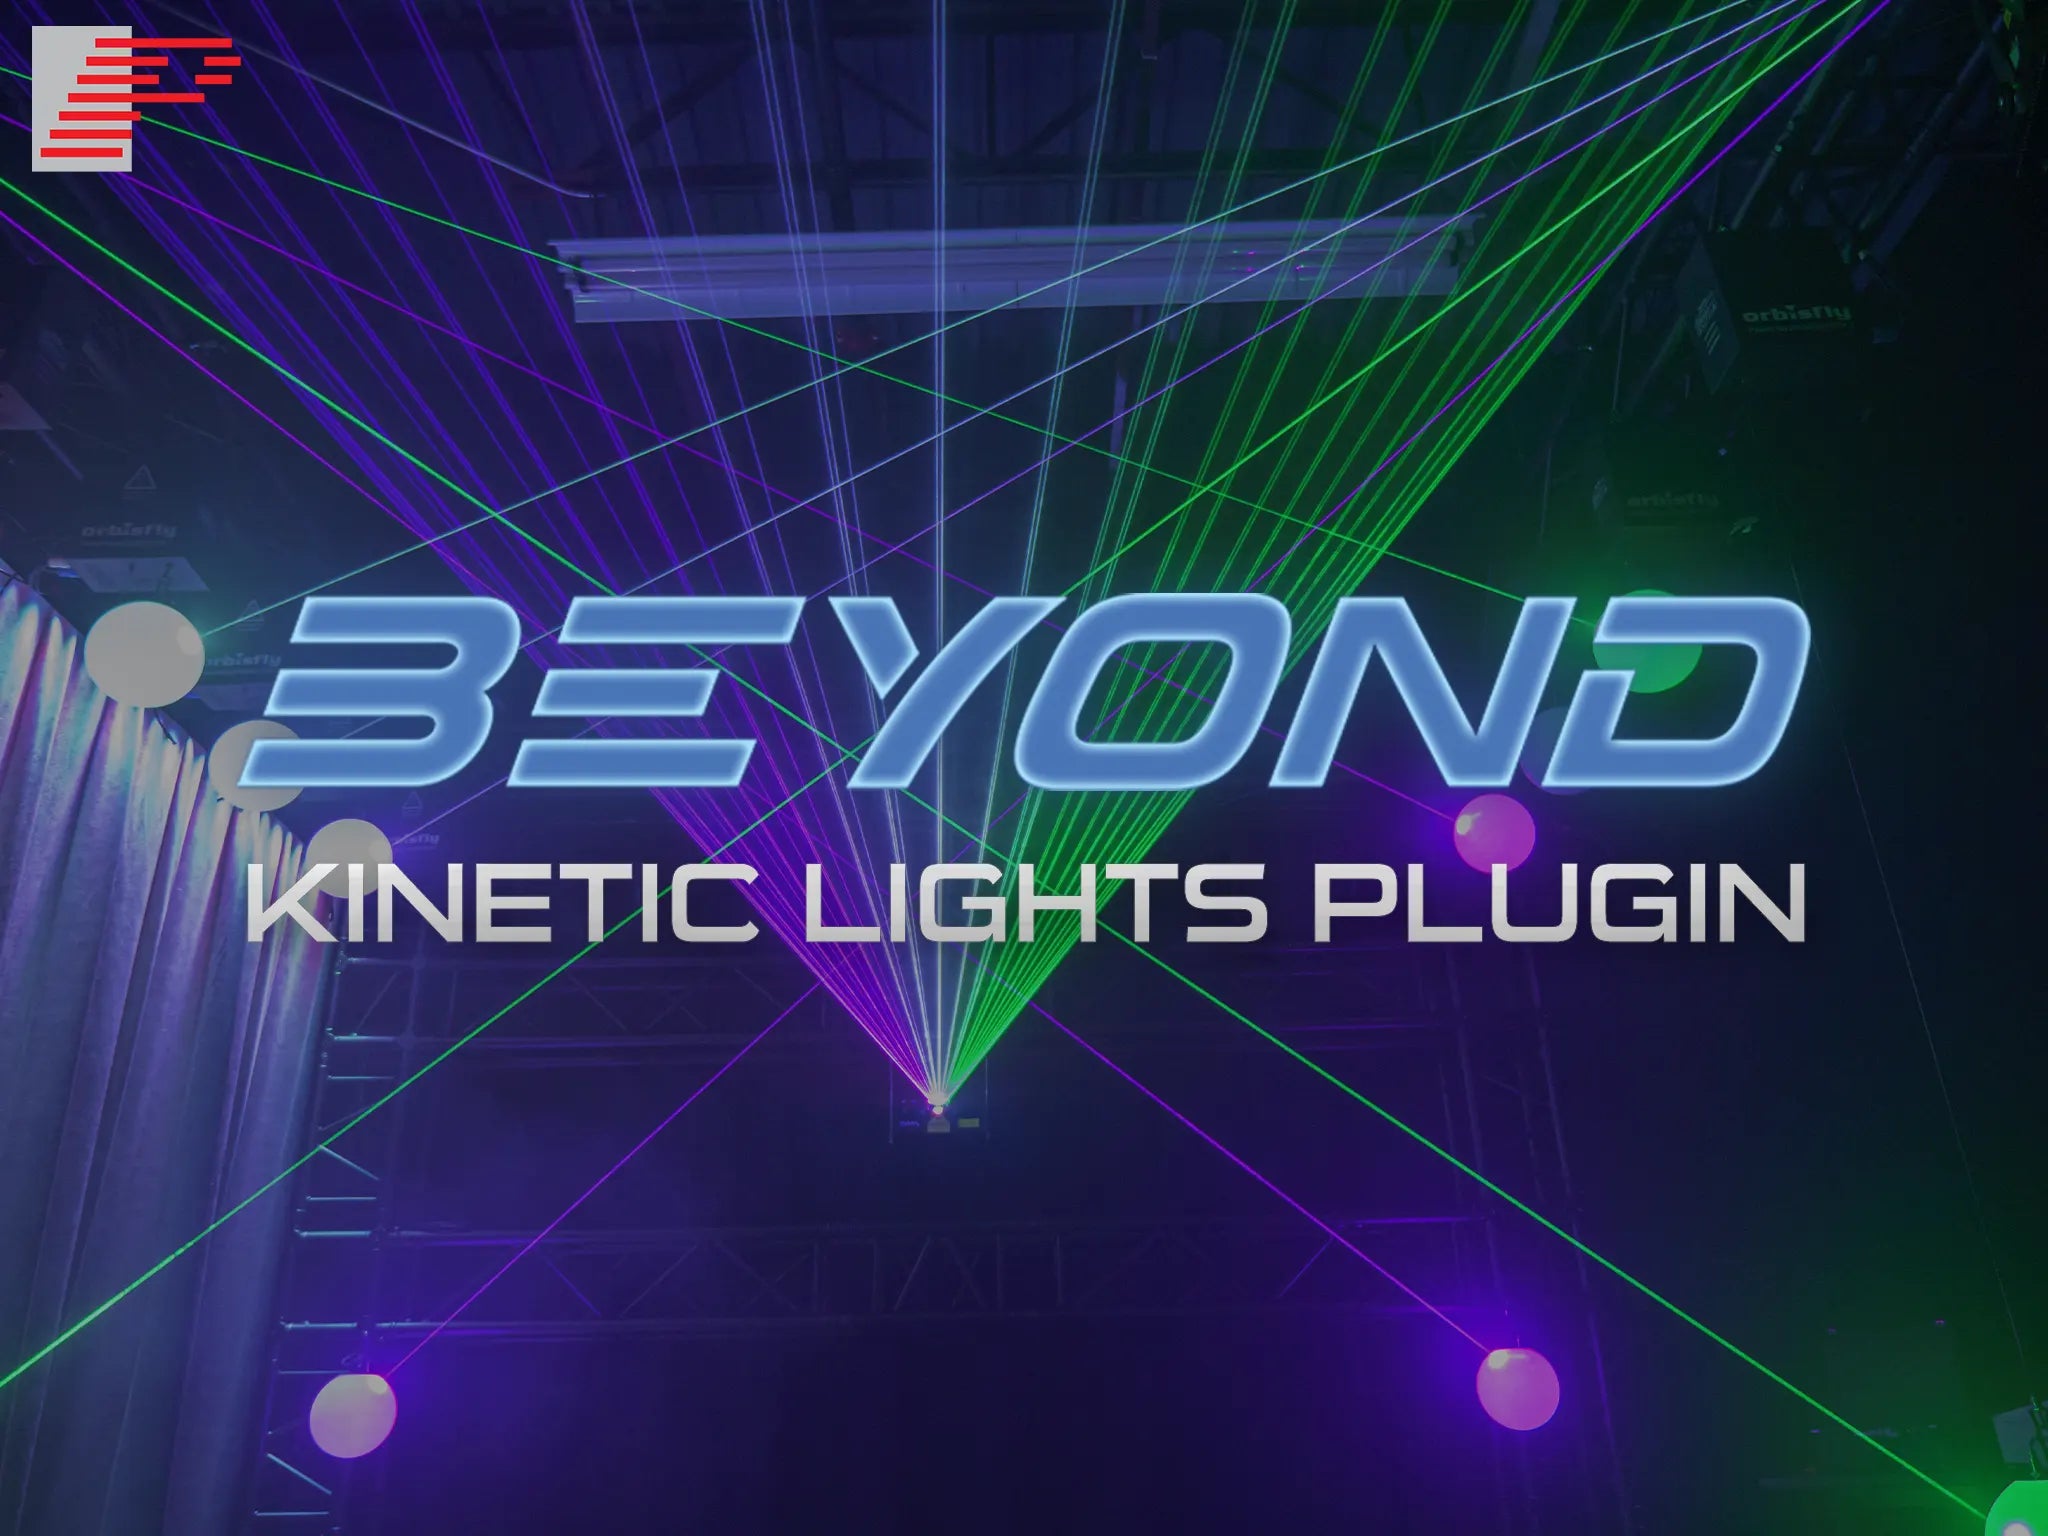 Pangolin BEYOND Kinetic lights plugin